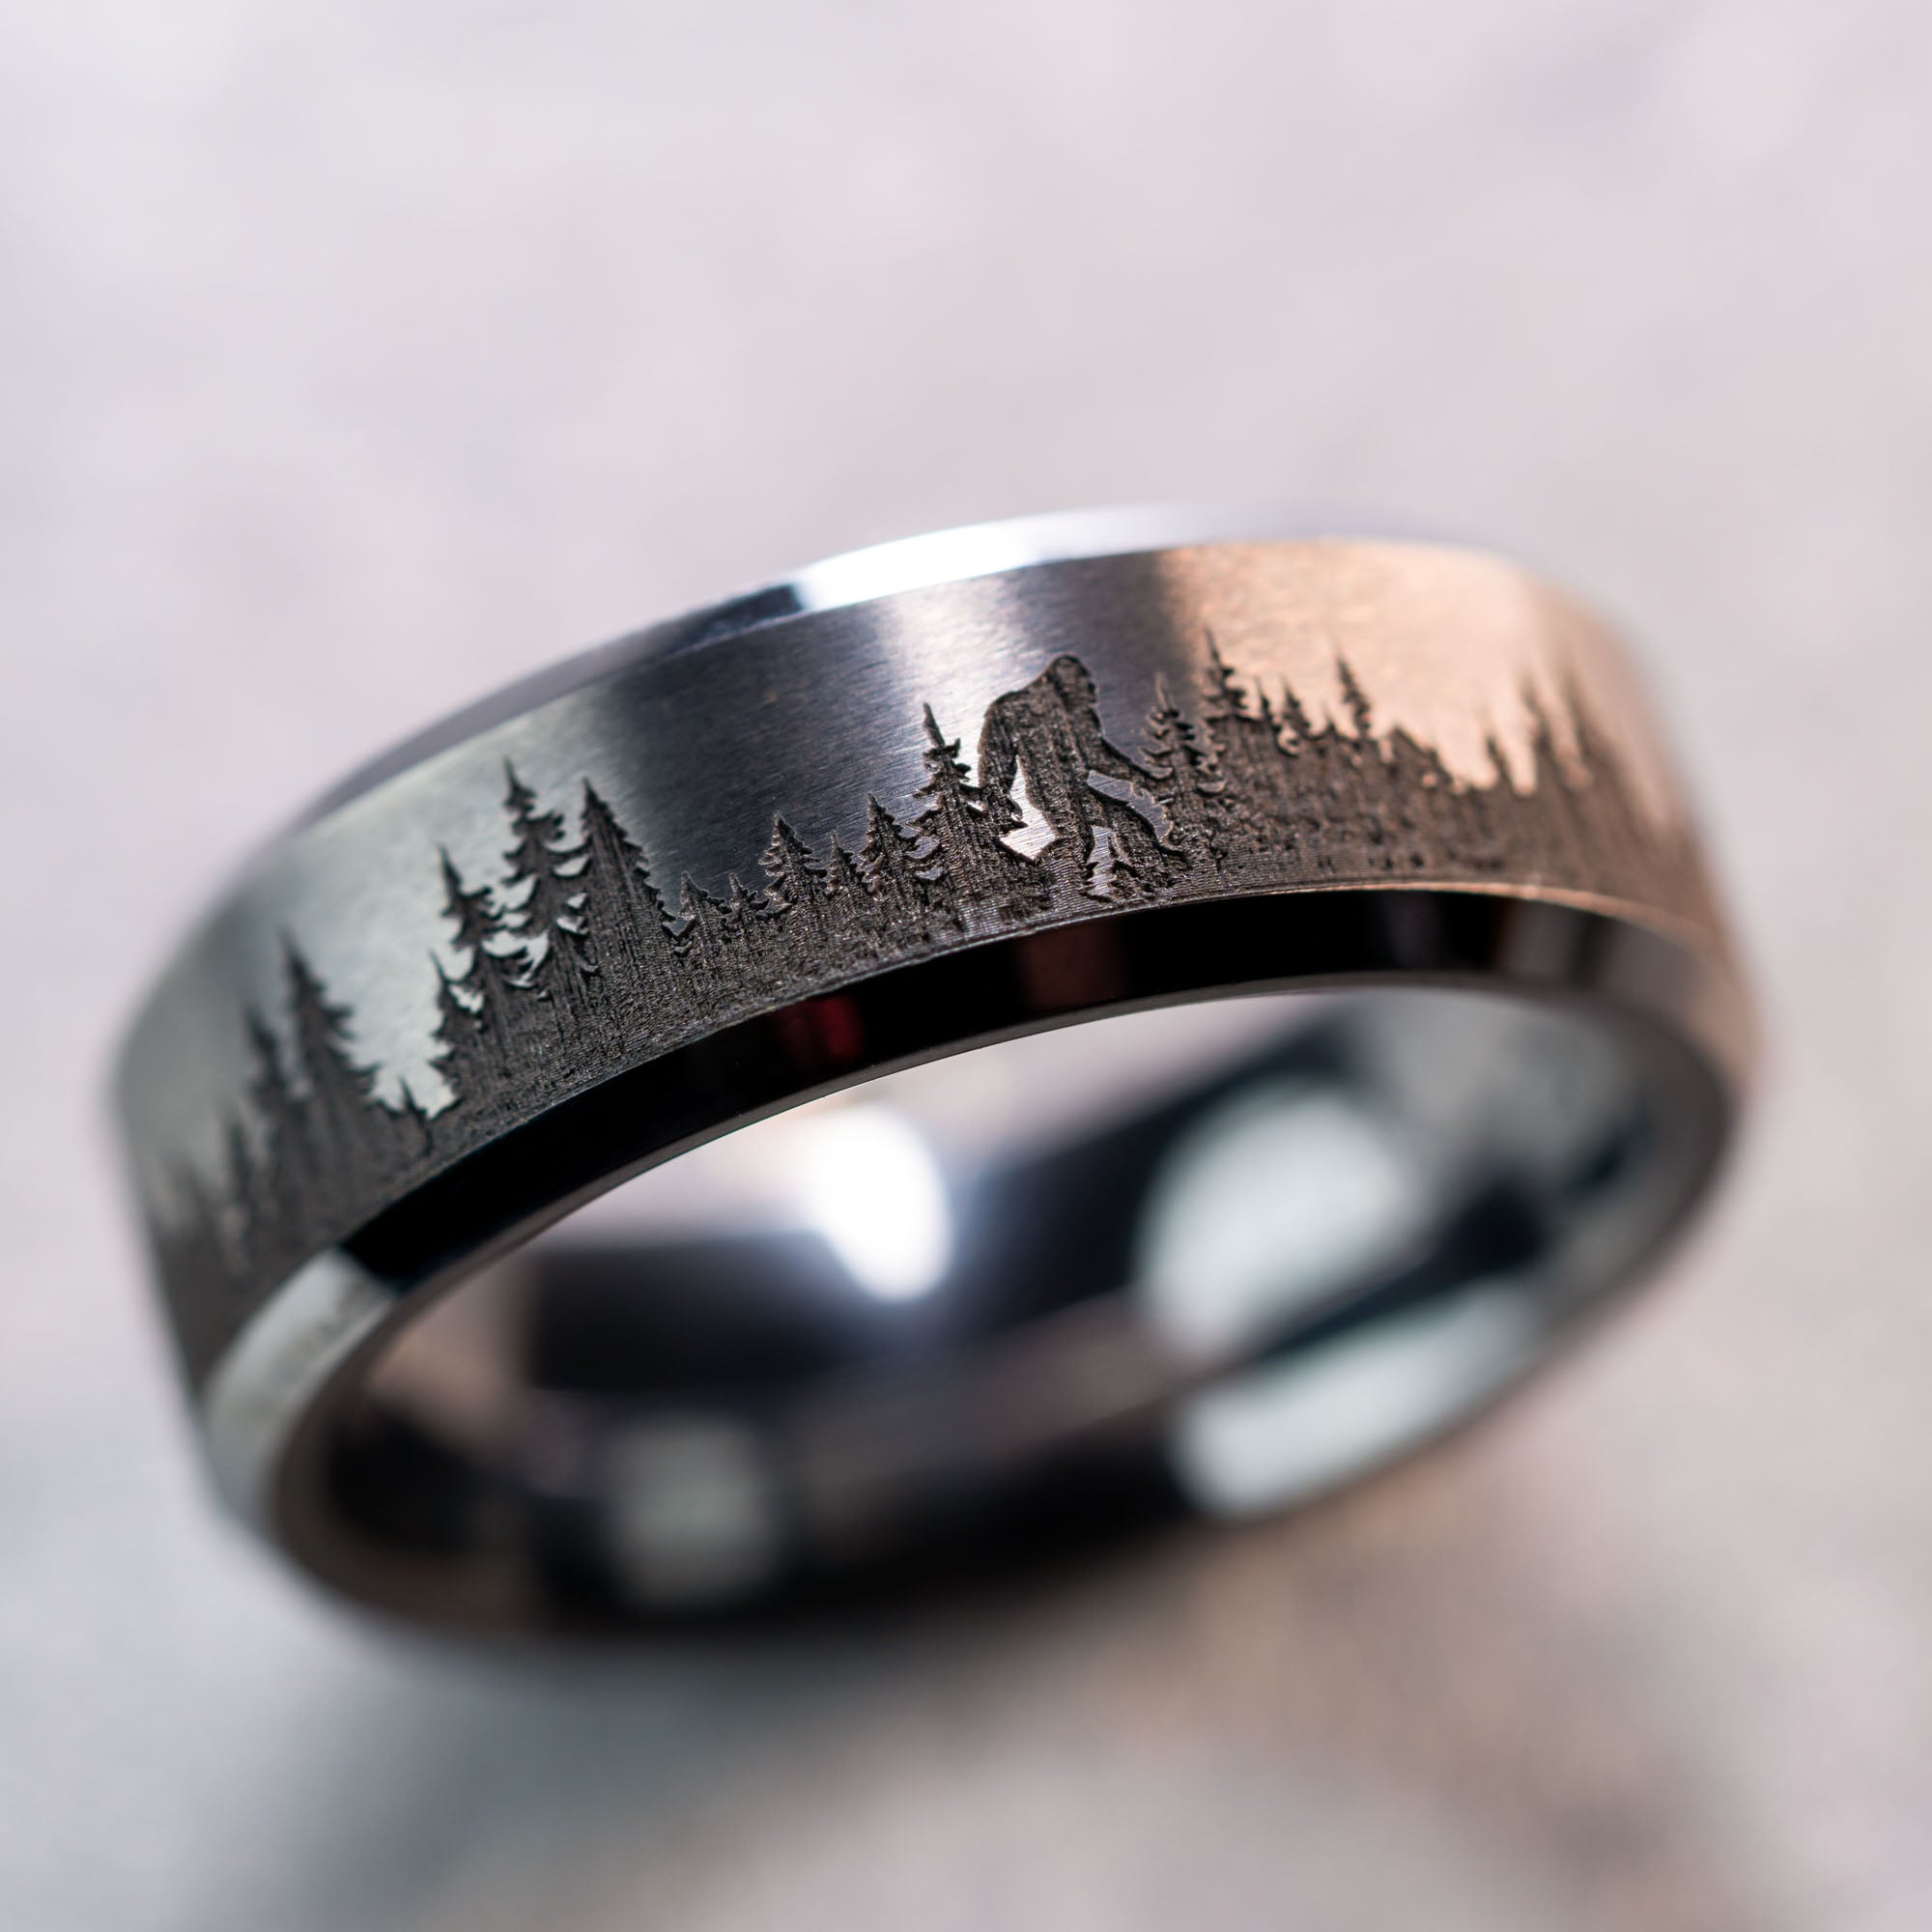 Beveled Tungsten Engraved Sasquatch Sighting Ring